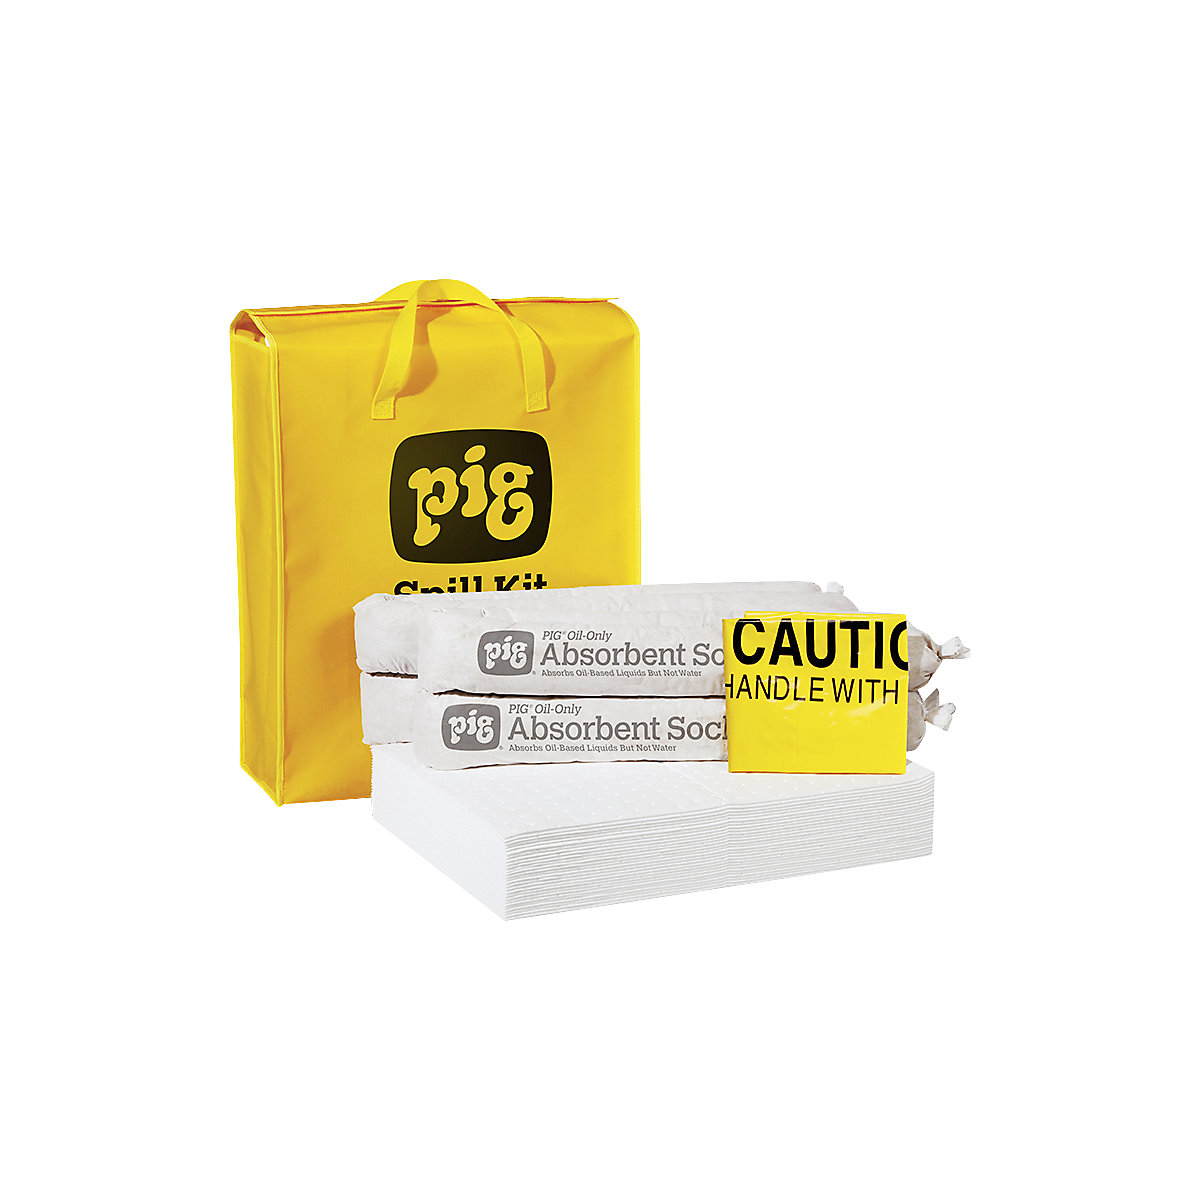 Kit de emergencia en bolsa – PIG